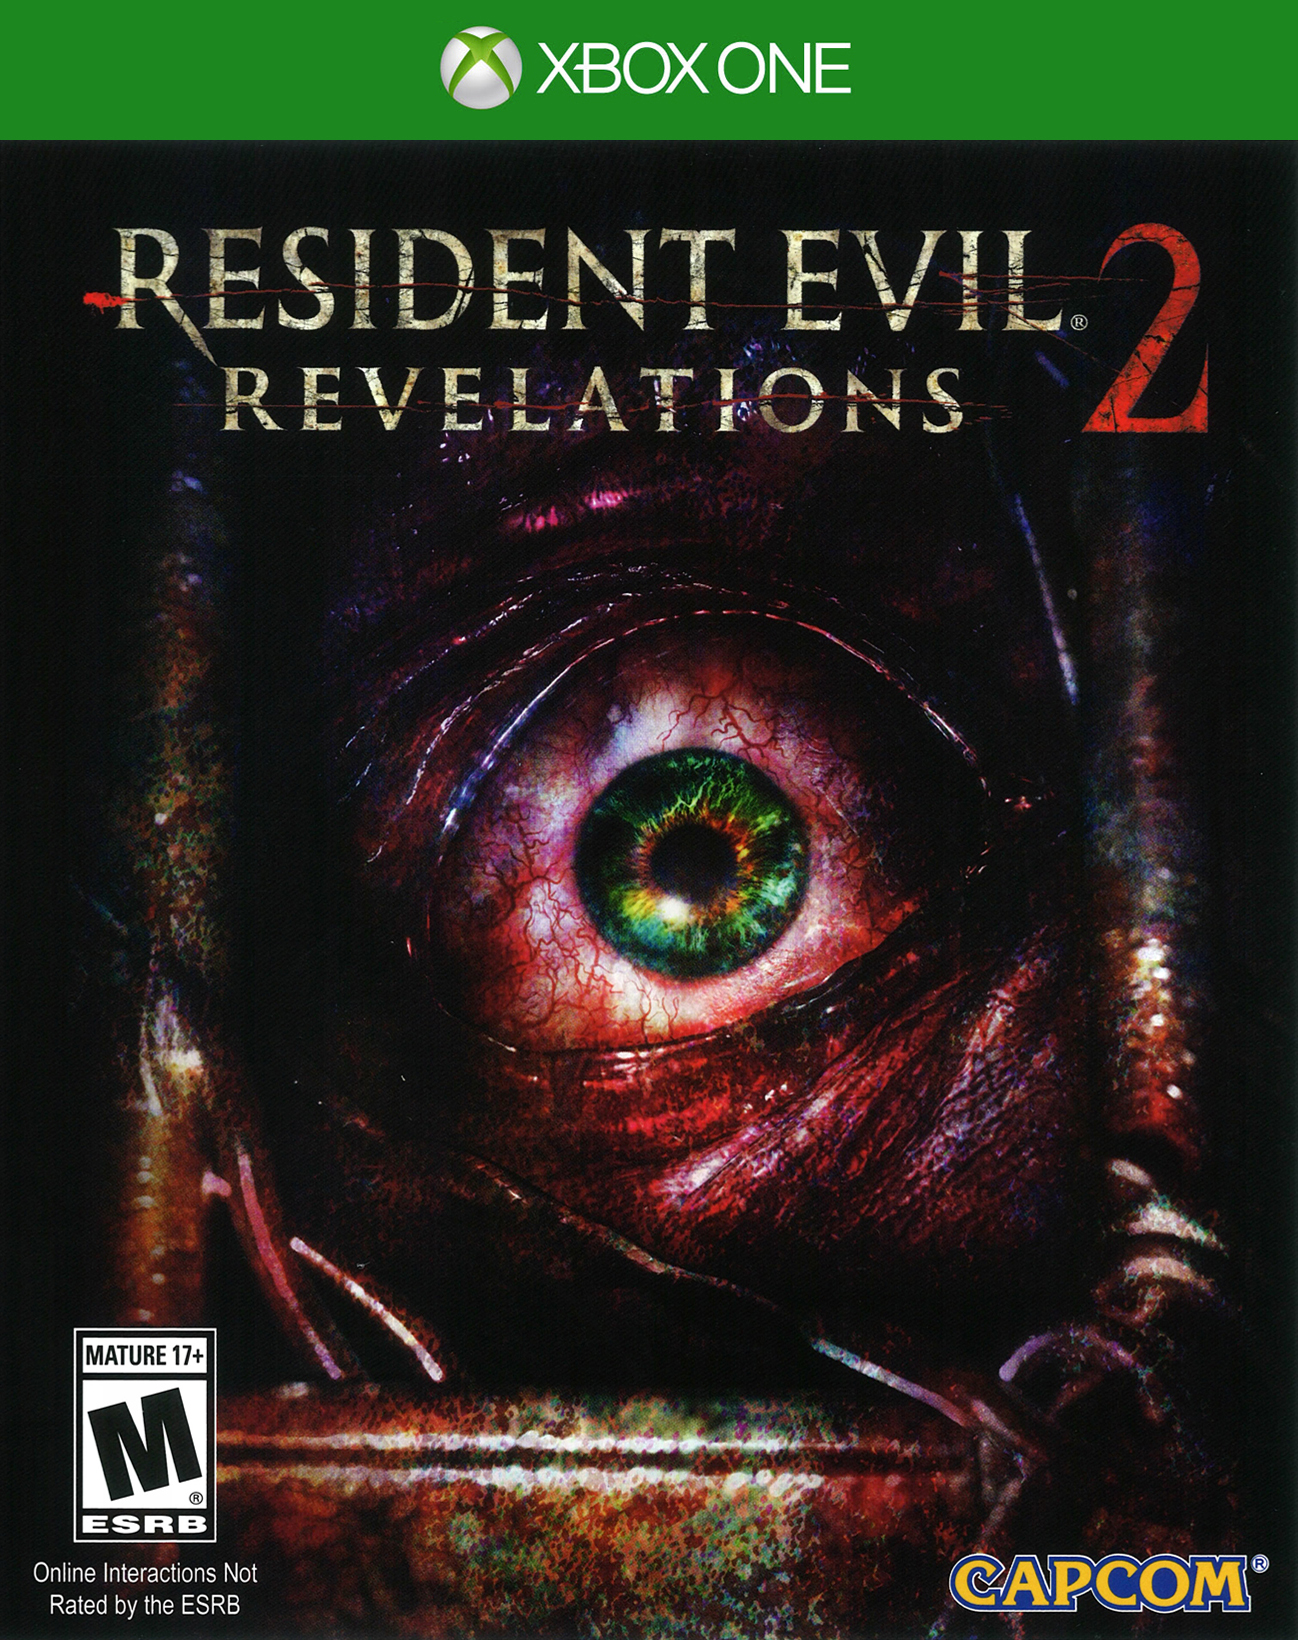 Resident Evil: Revelations 2, Capcom, Xbox One - image 1 of 11